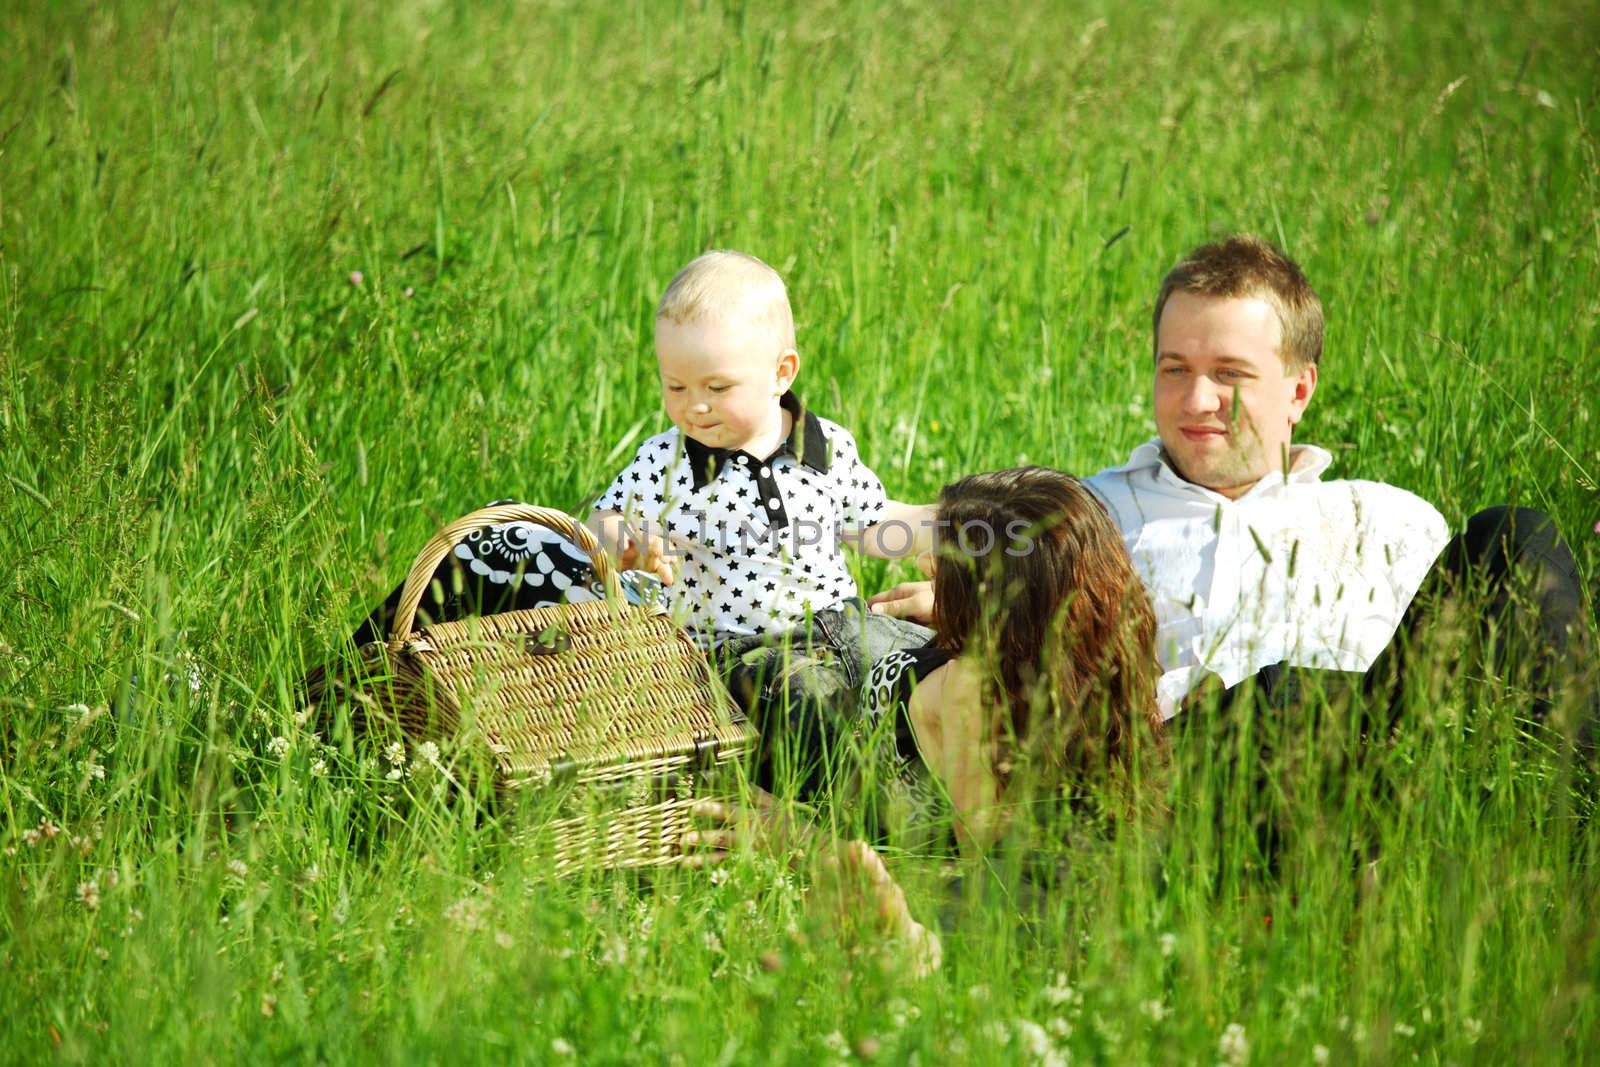 family picnic by Yellowj